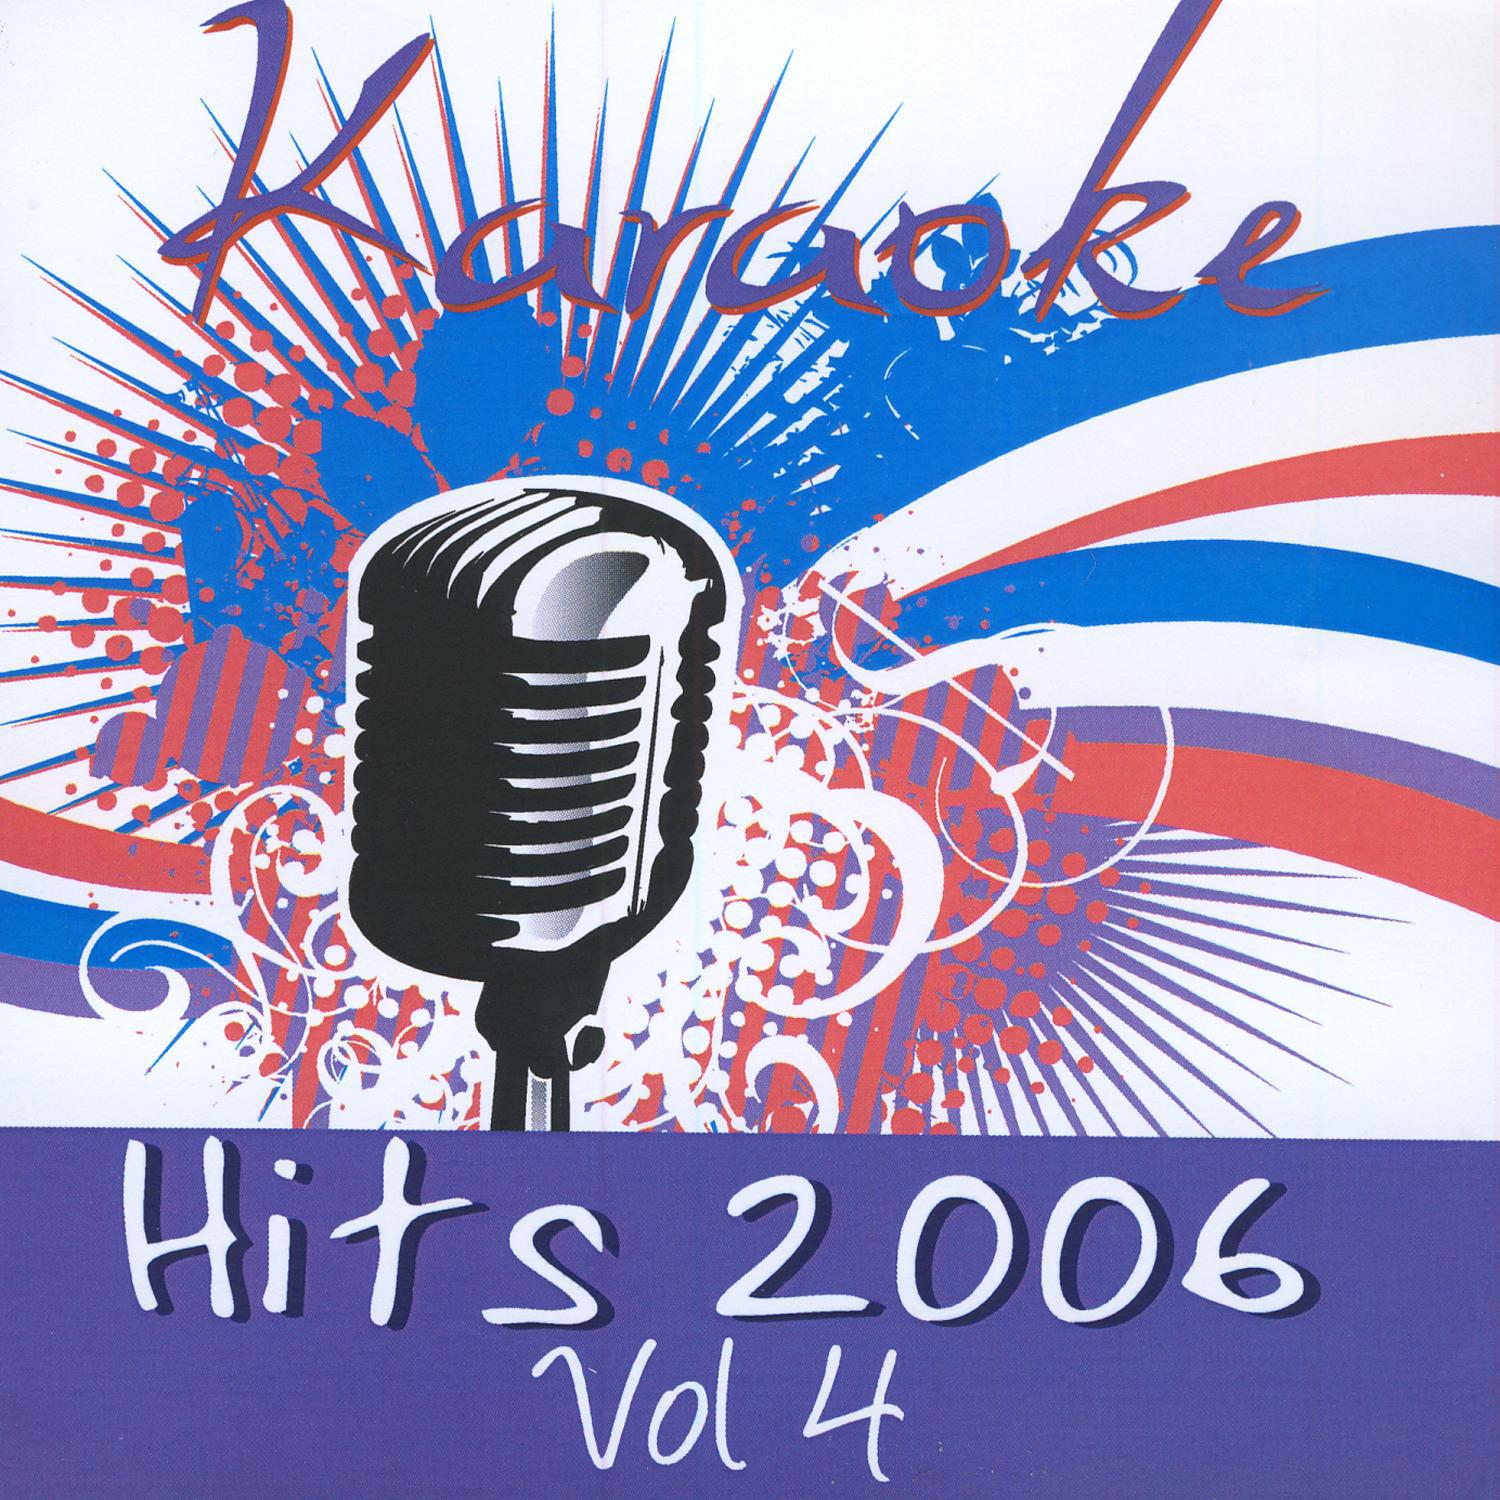 Karaoke - Hits 2006 Vol. 4